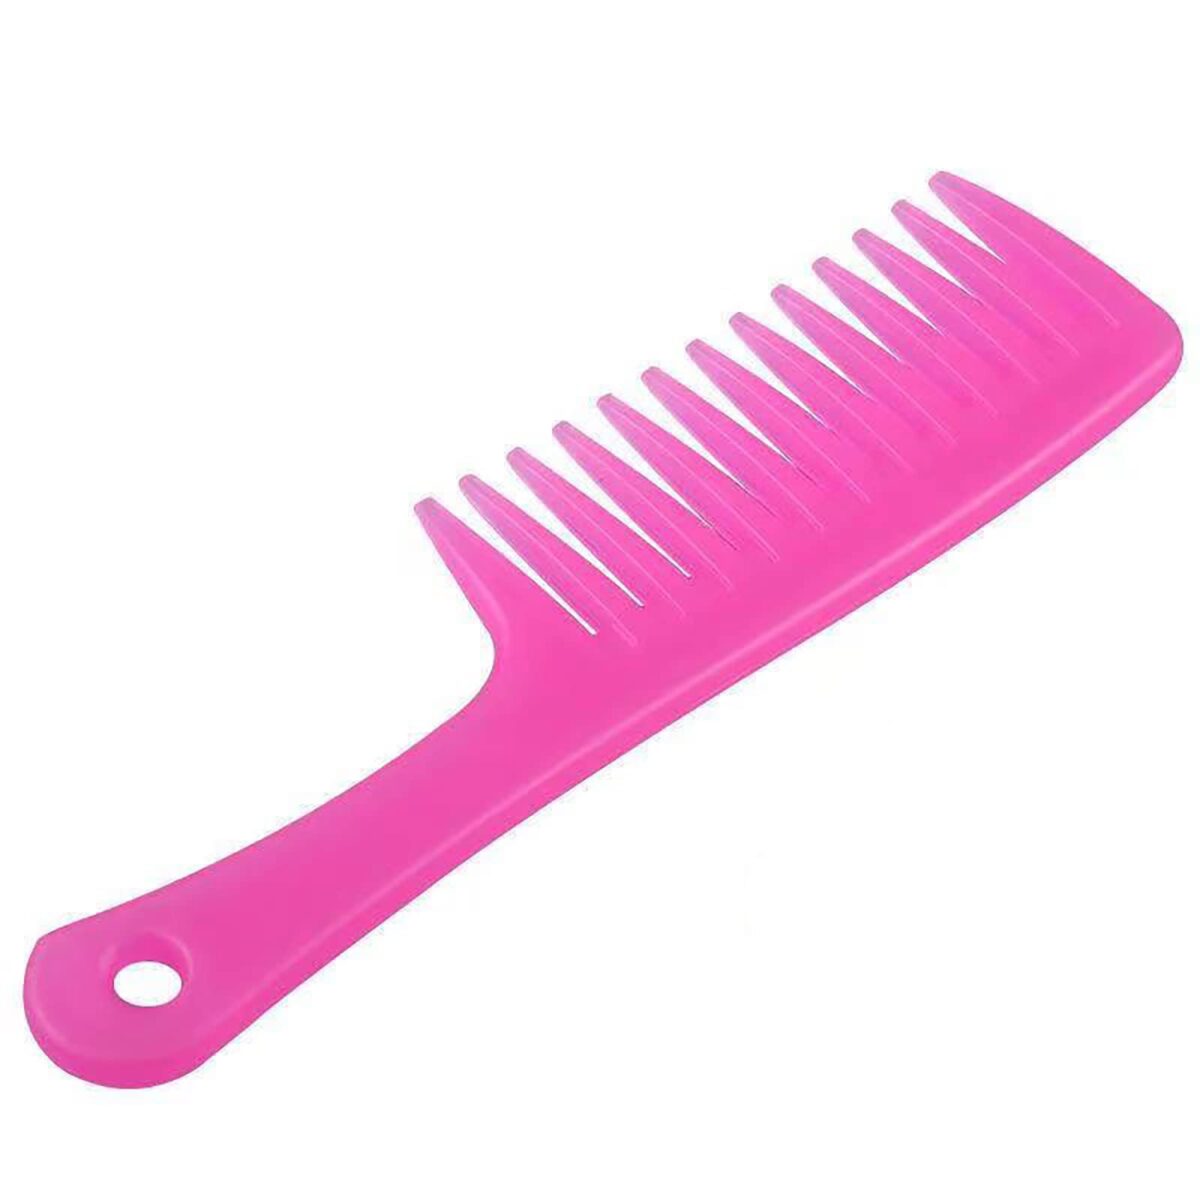  Large Hair Detangling Comb, Wide Teeth